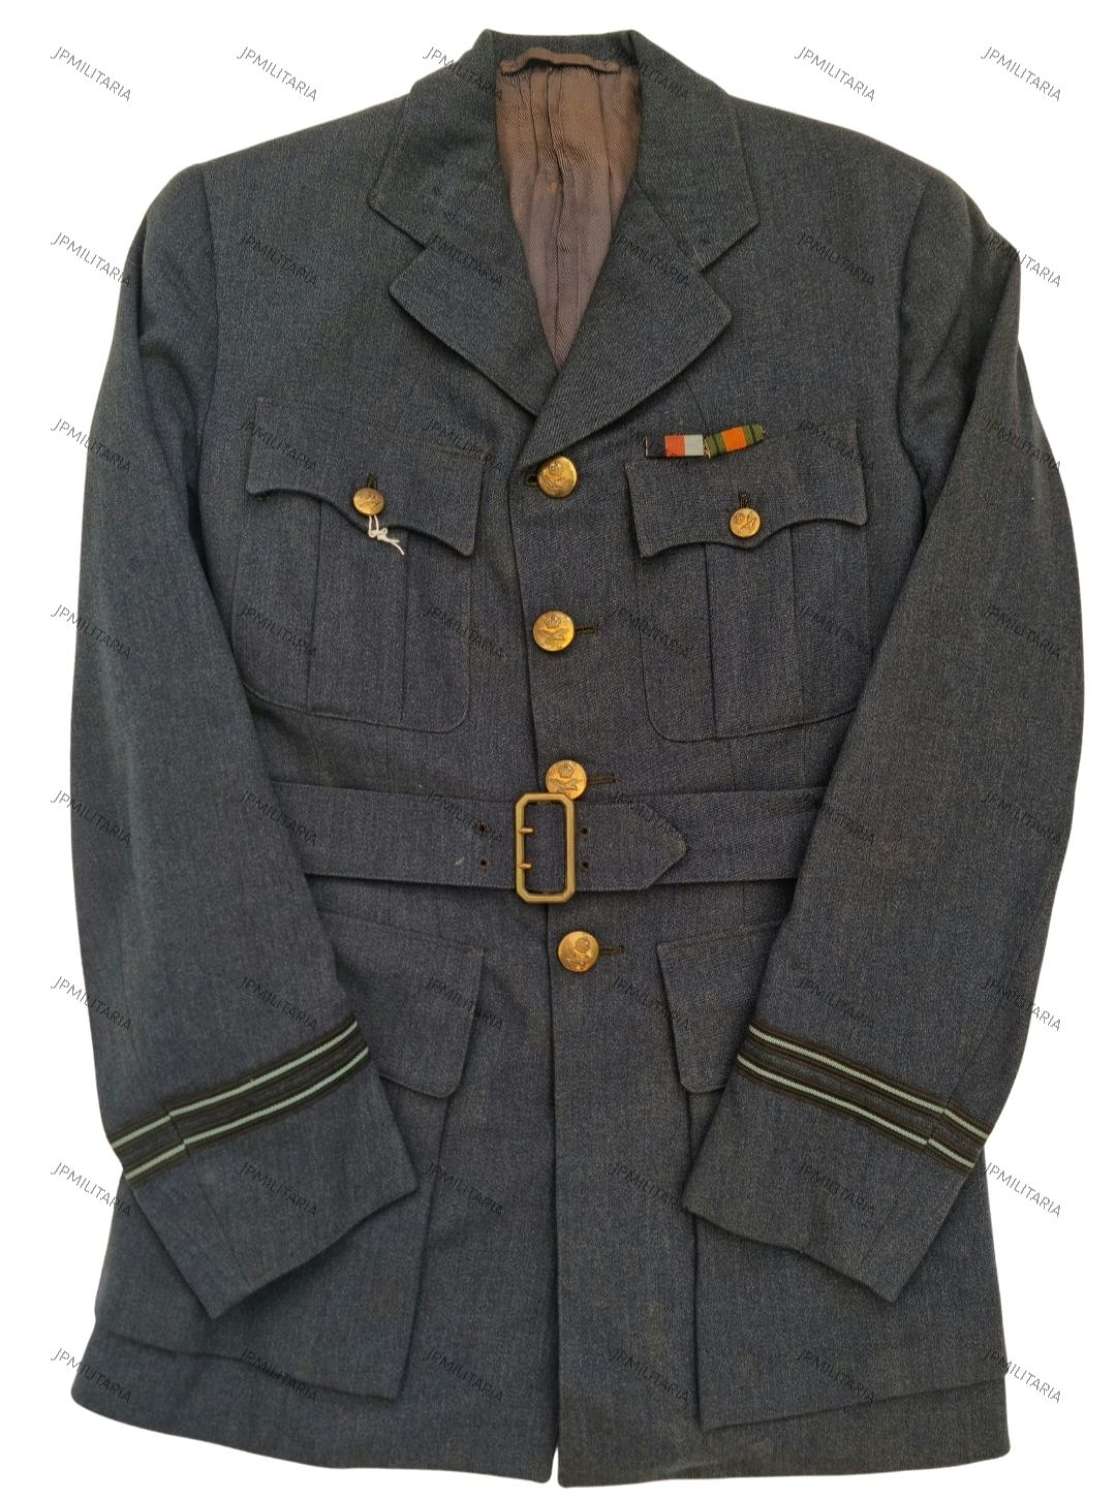 WW2 RAF Officers jacket